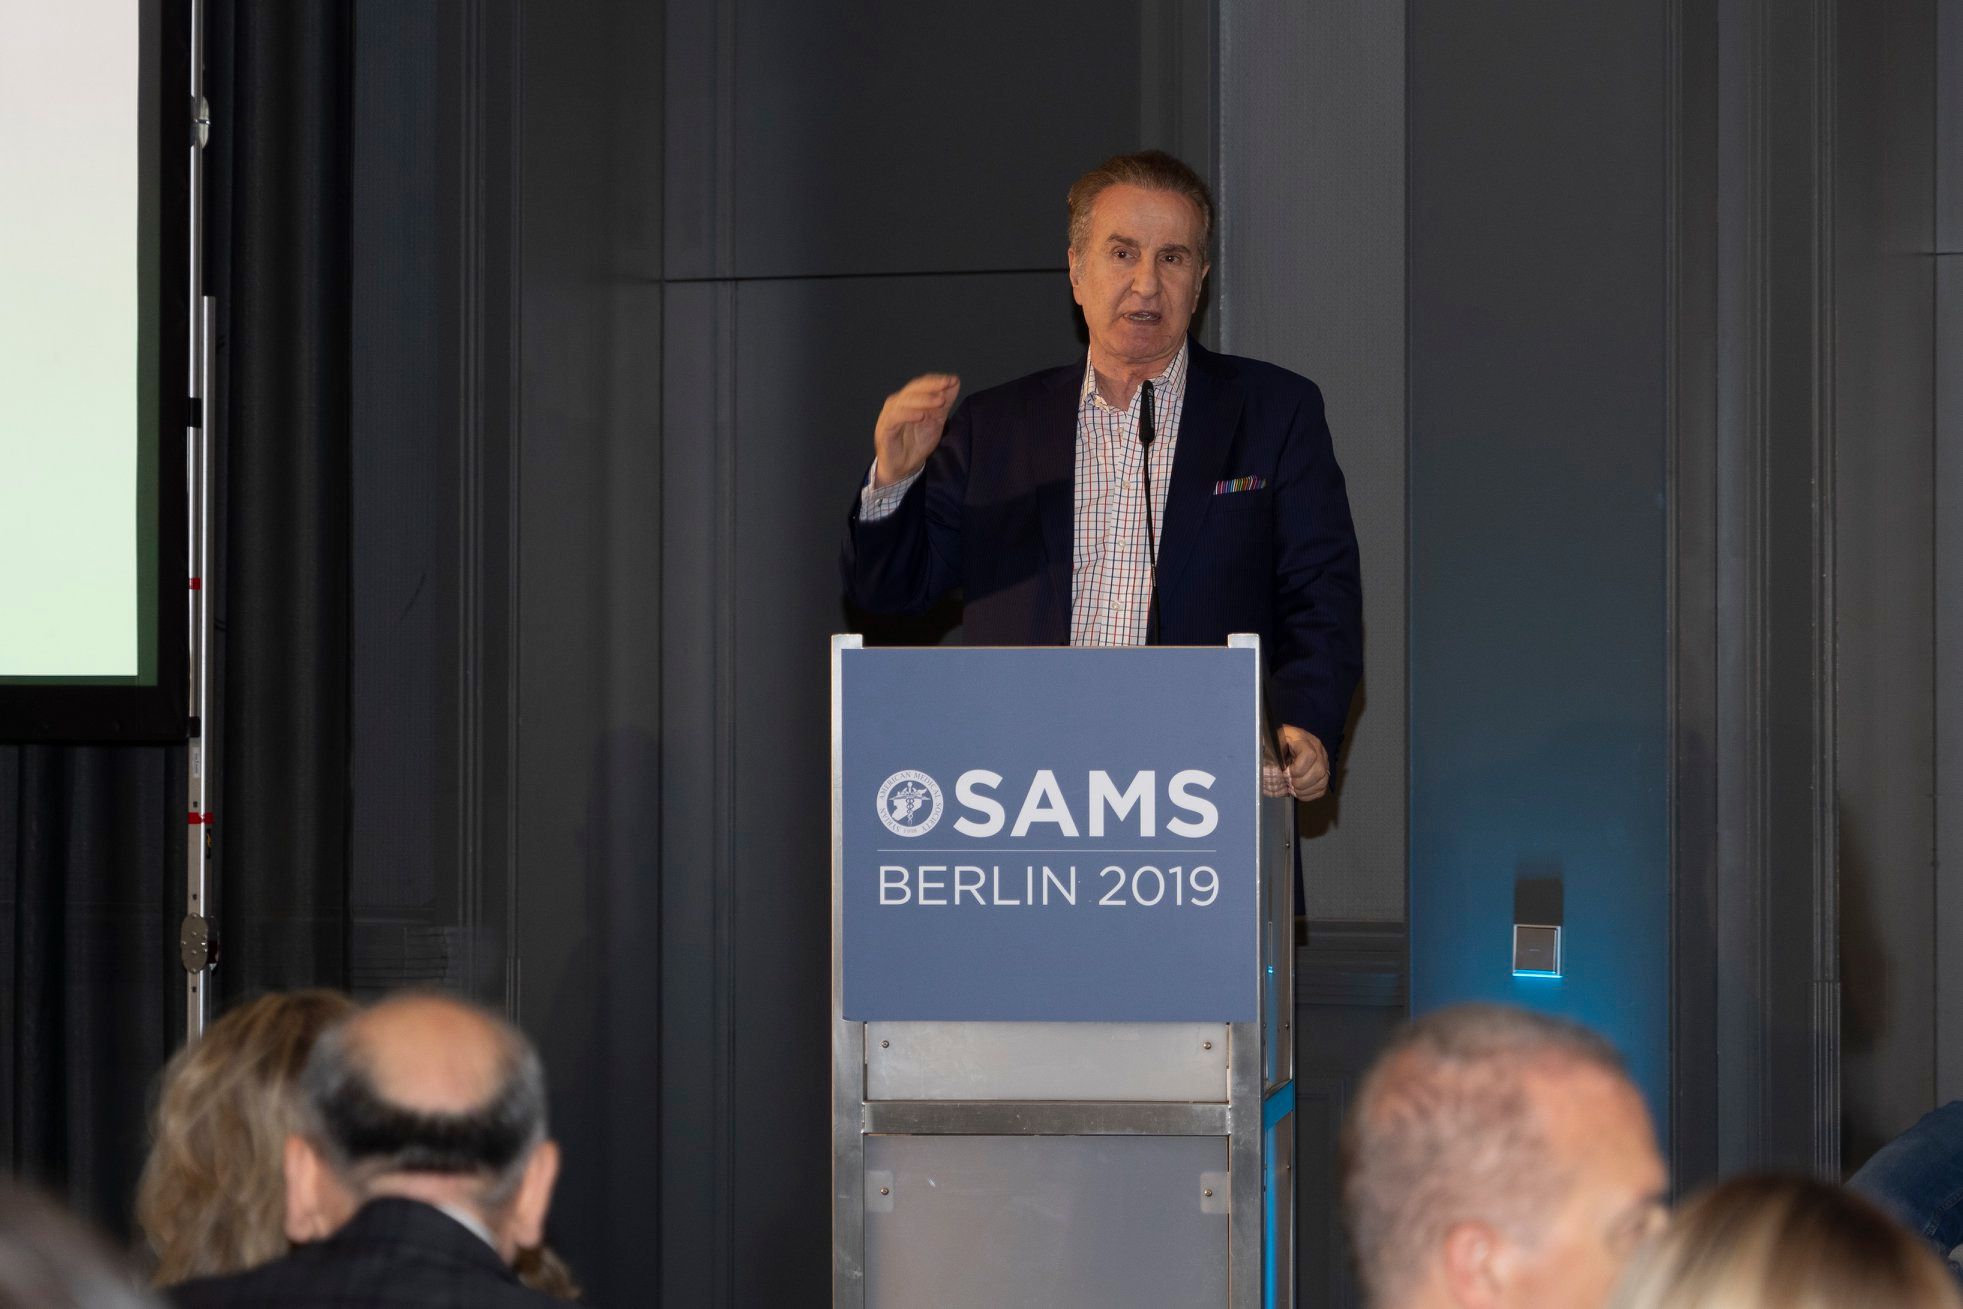 SAMS 19th International Conference in Berlin